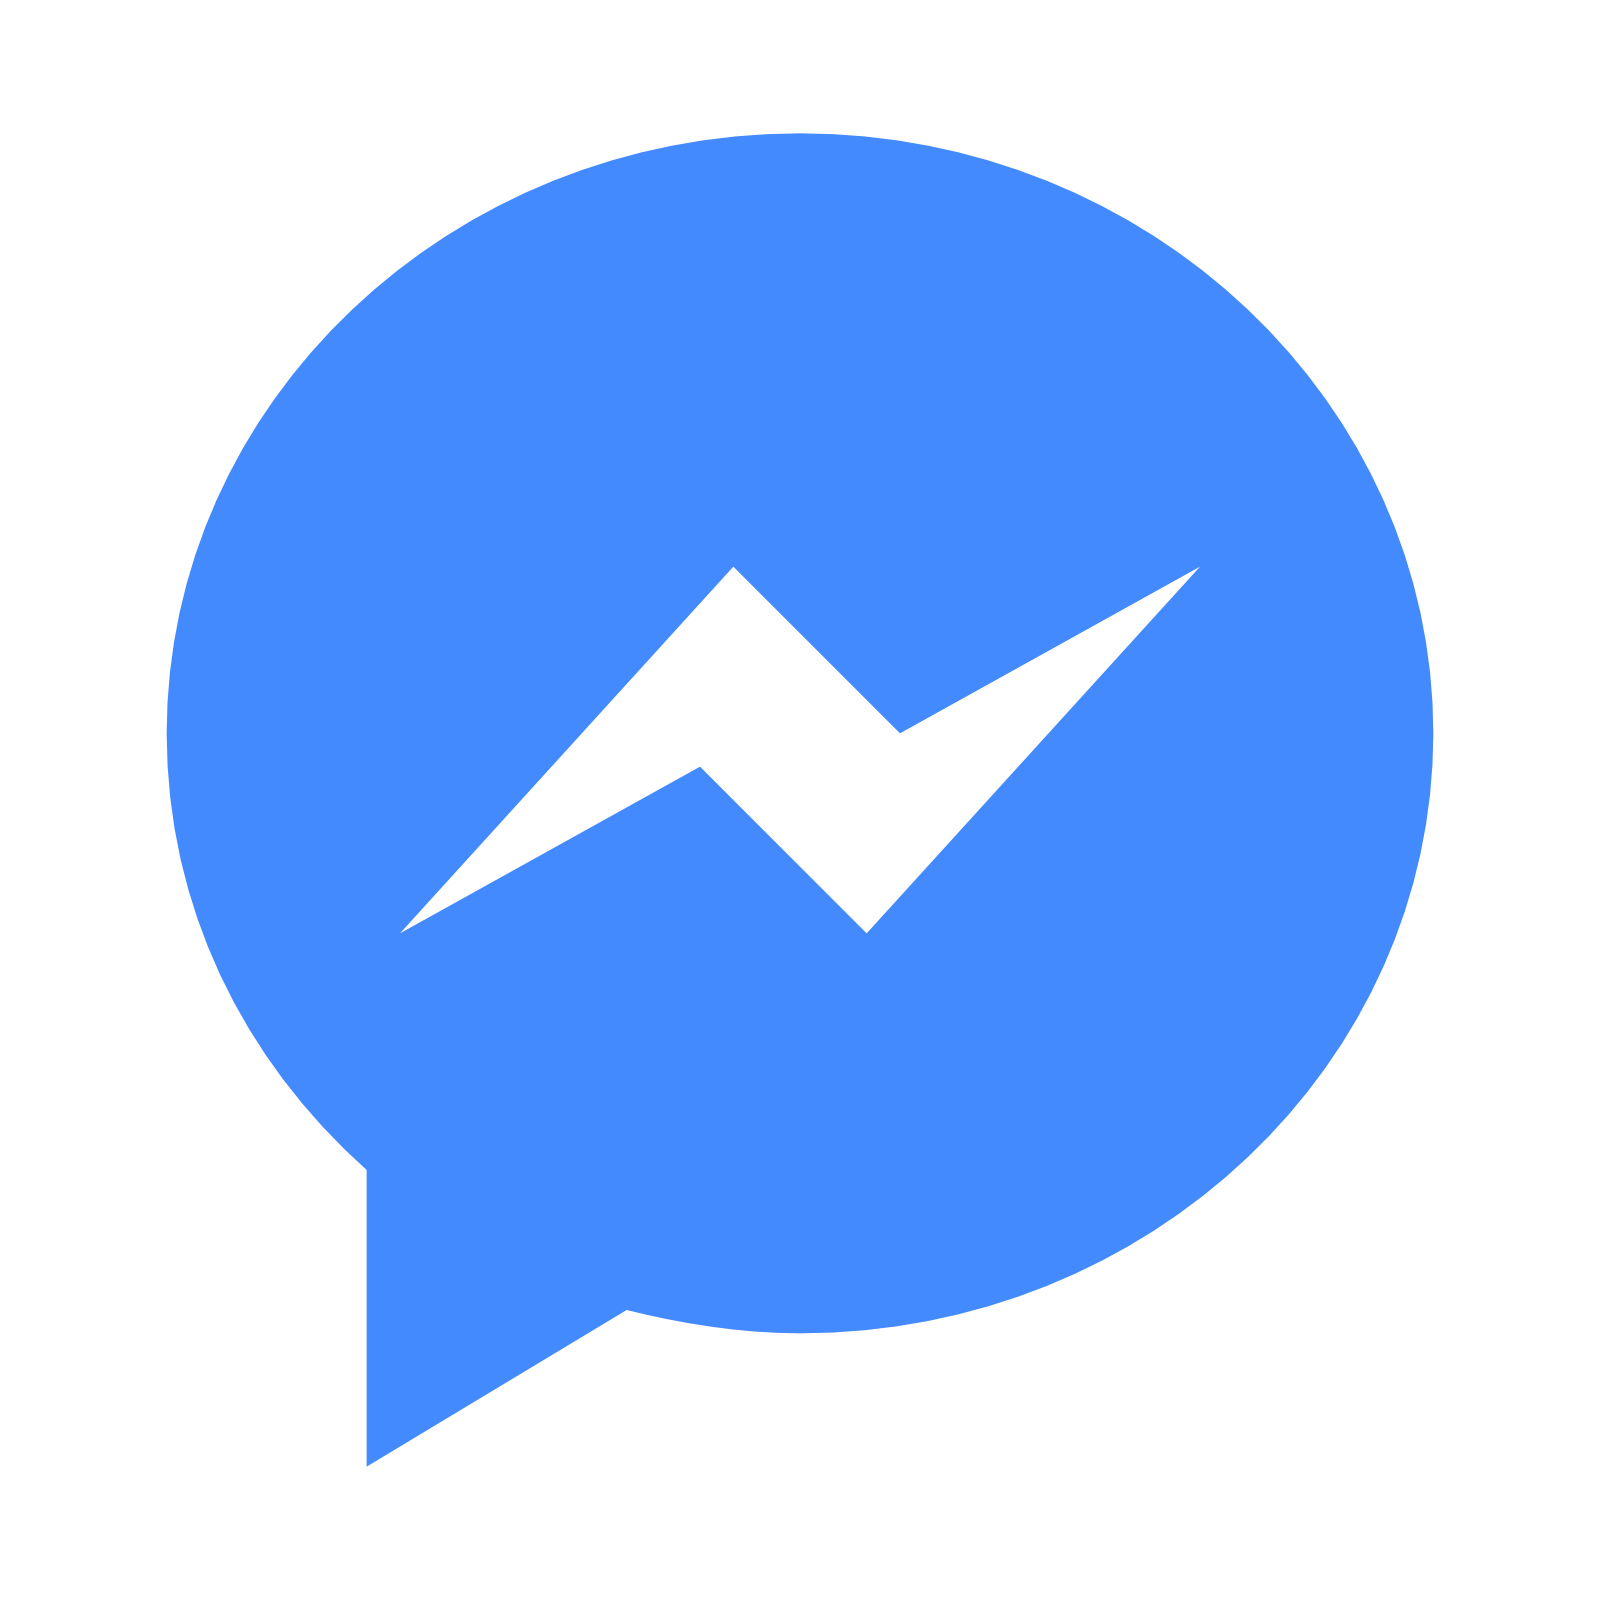 FB Messenger Logo - Facebook Messenger Logo Transparent PNG Pictures - Free Icons and ...